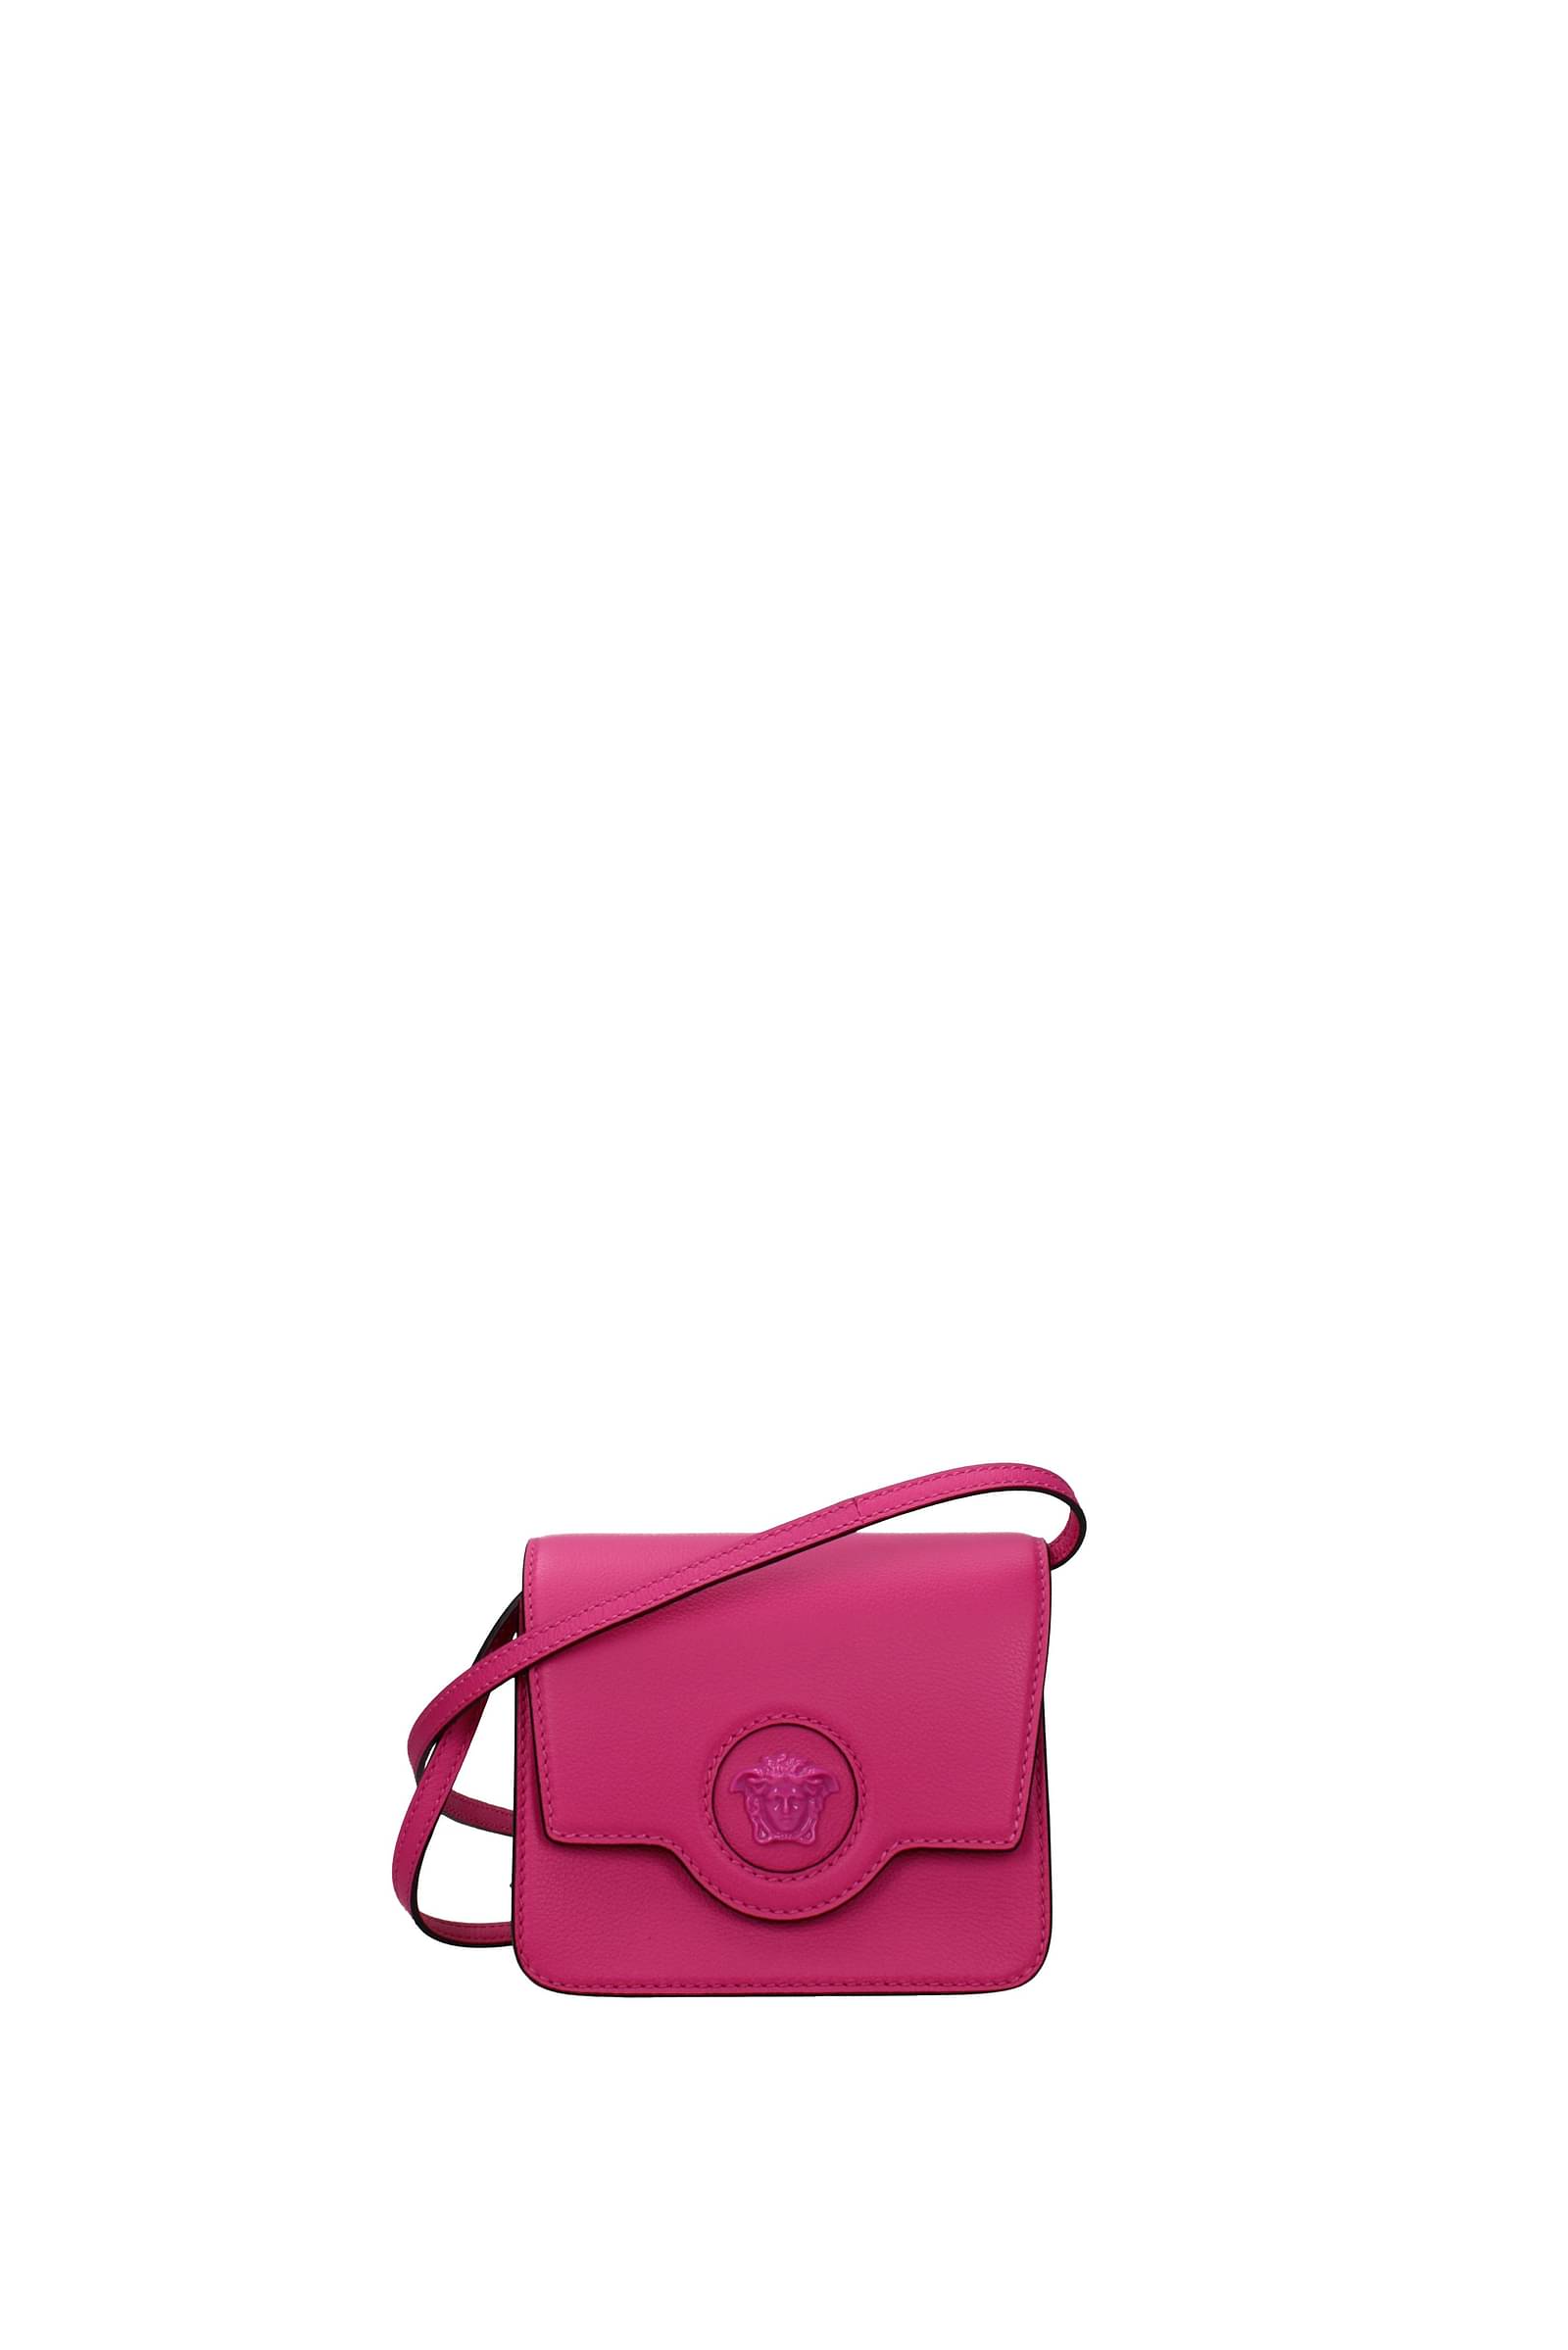 Versace La Medusa Denim Top Handle Bag Handbags - Bloomingdale's | Bags,  Cute laptop bags, Top handle bag